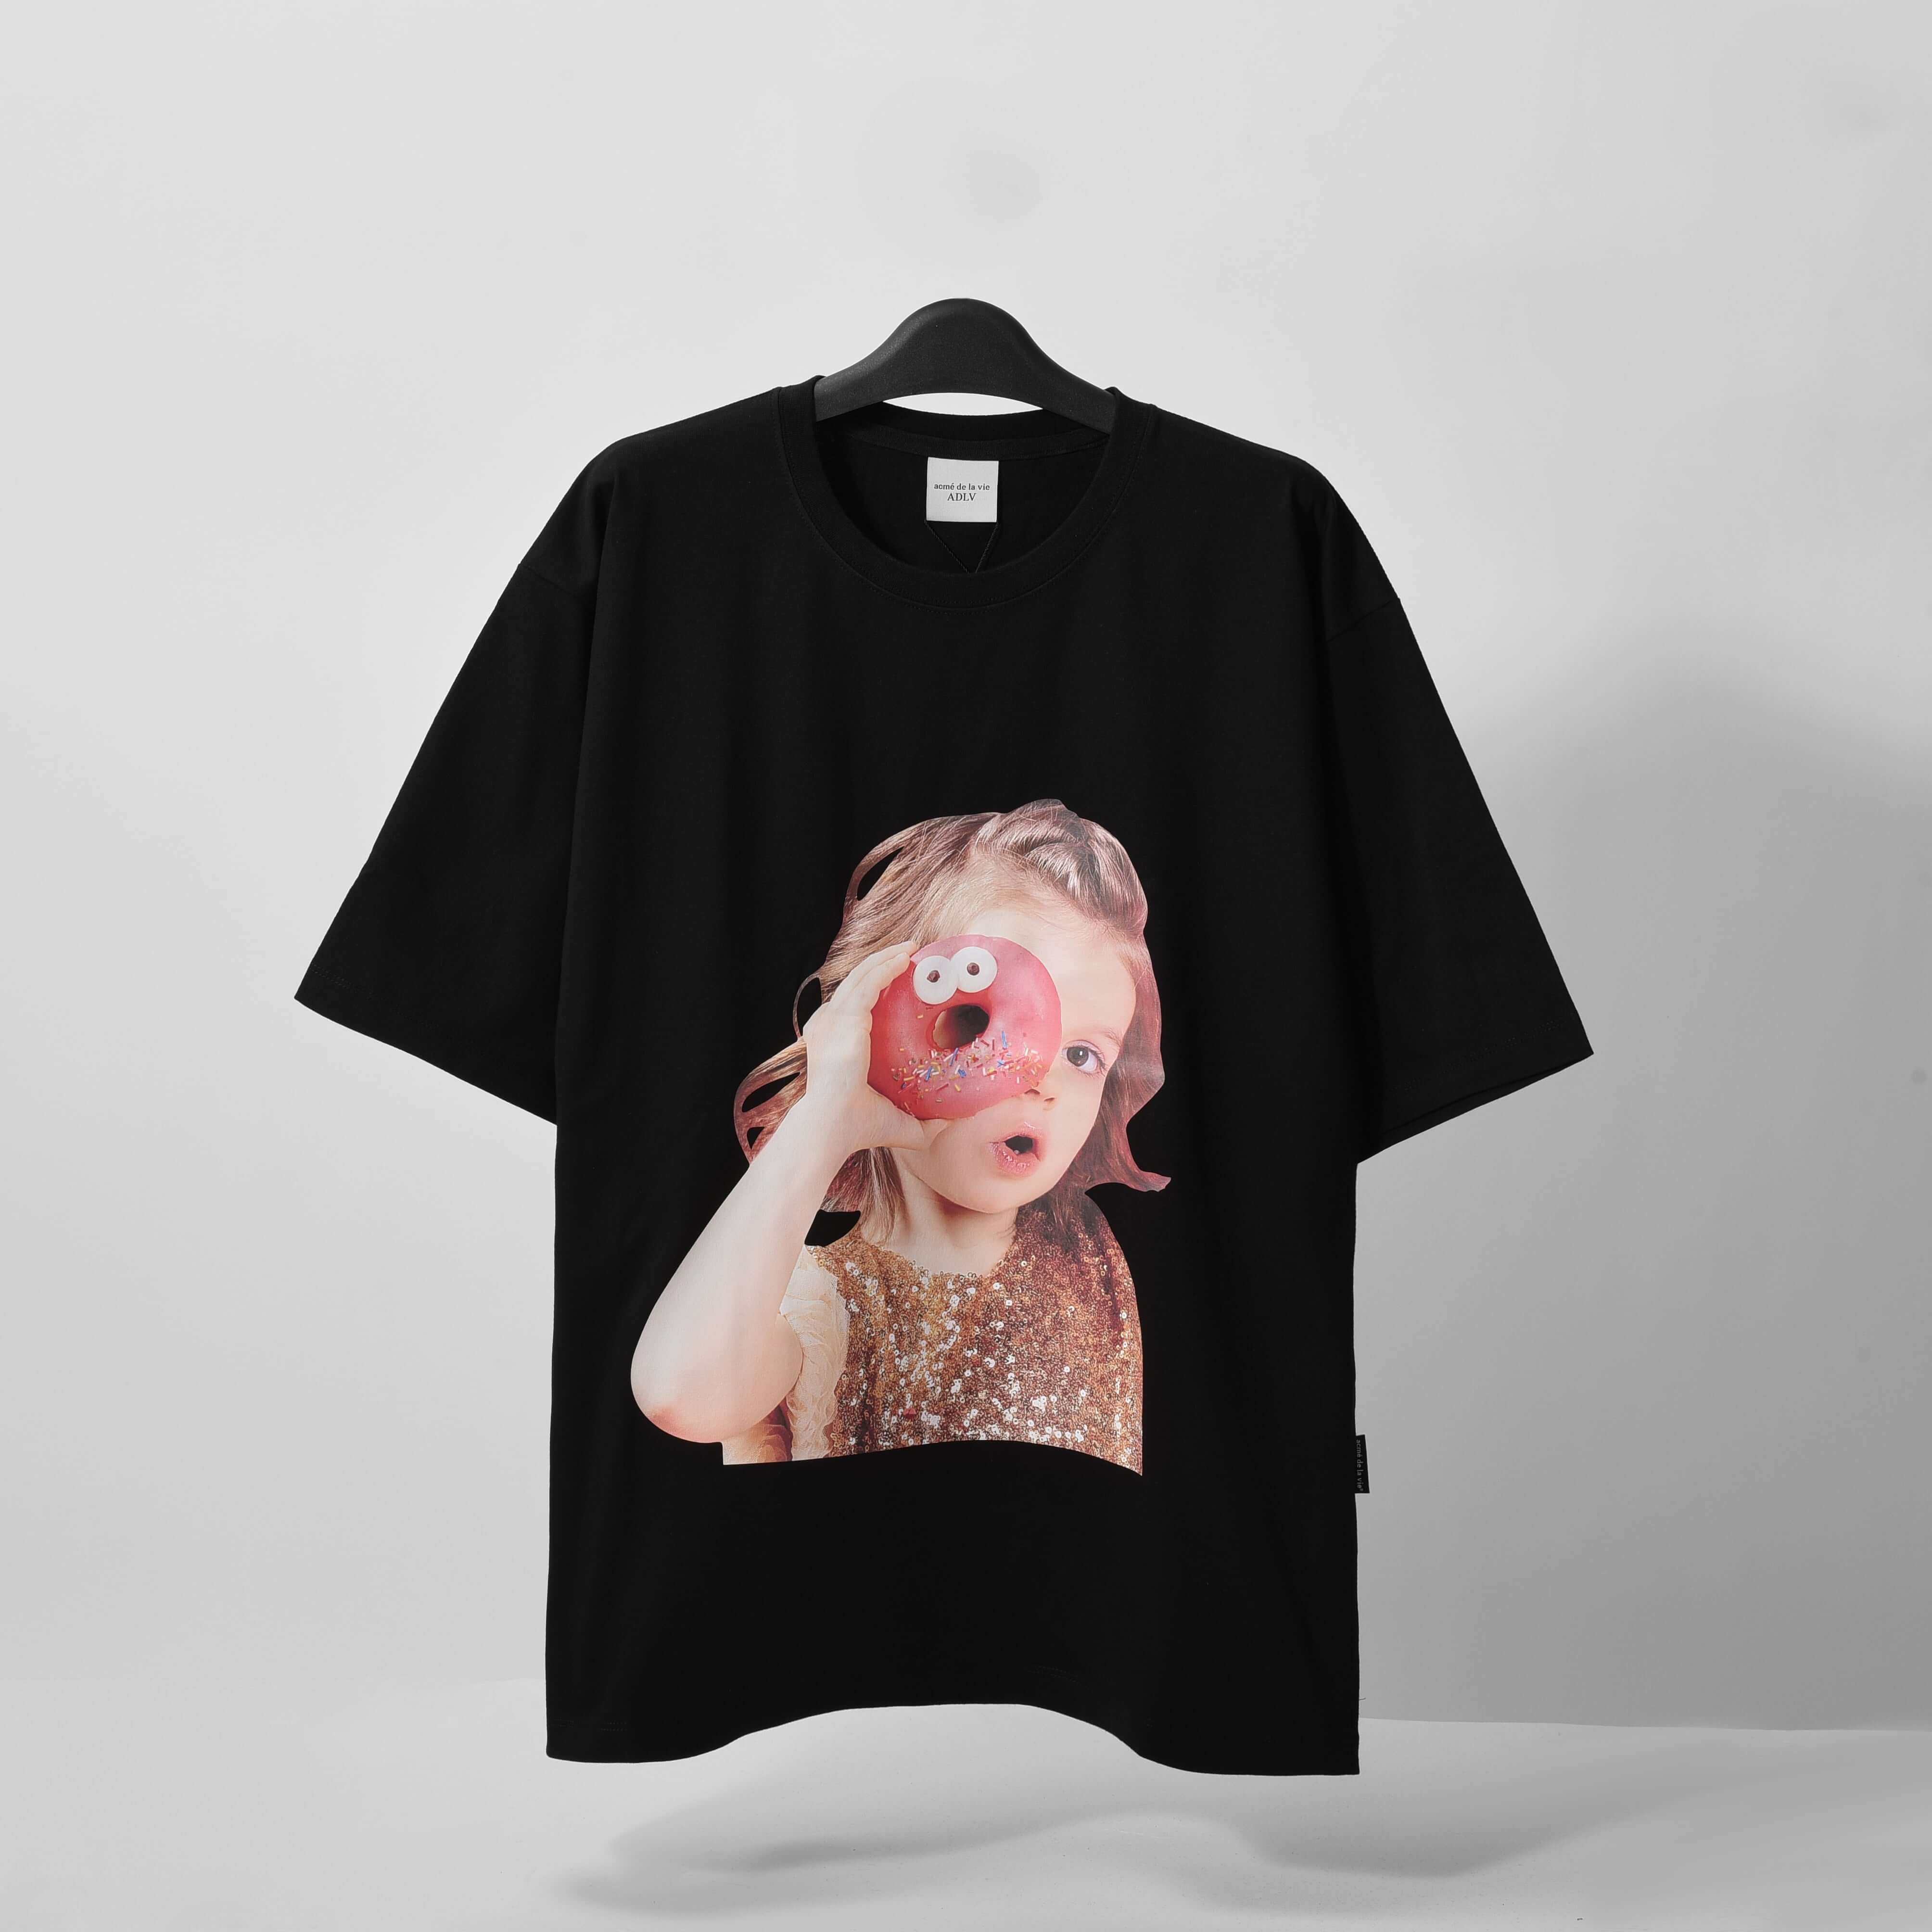 ADLV Baby Face Short Sleeve Donut 4 Tshirt - Black